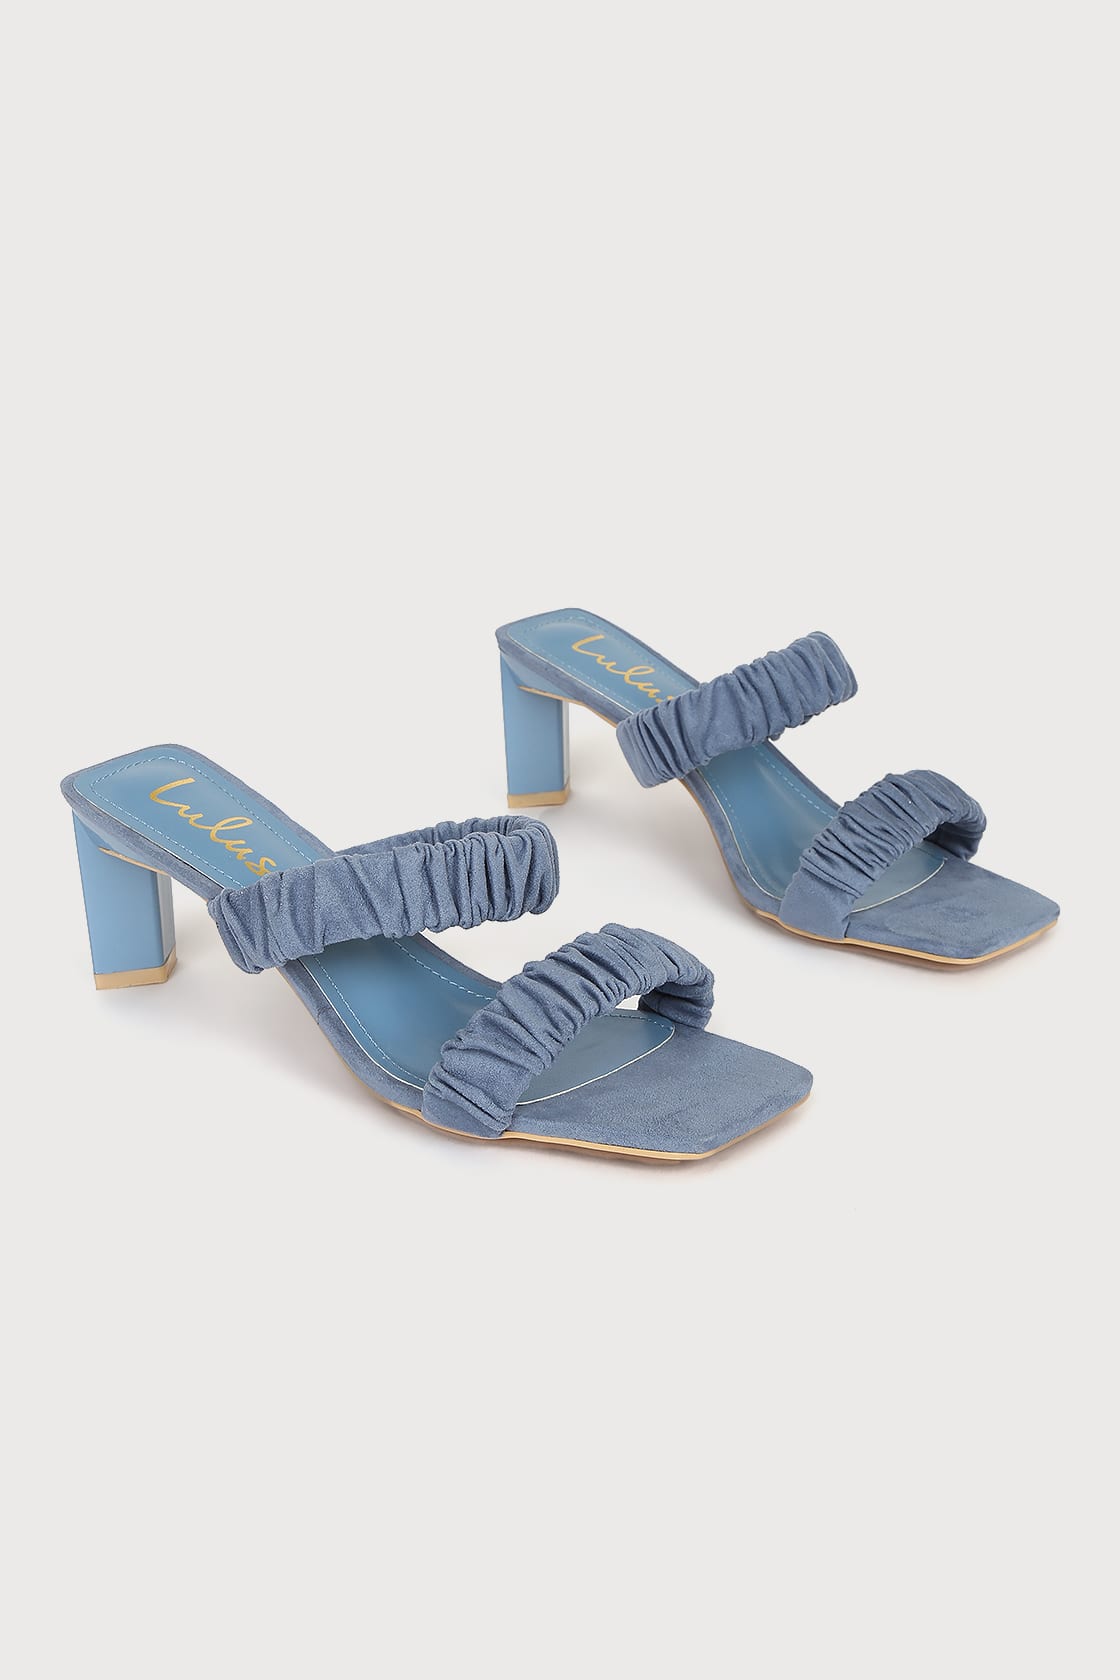 Blue High Heels - Suede Sandals - High Heel Sandals - Lulus